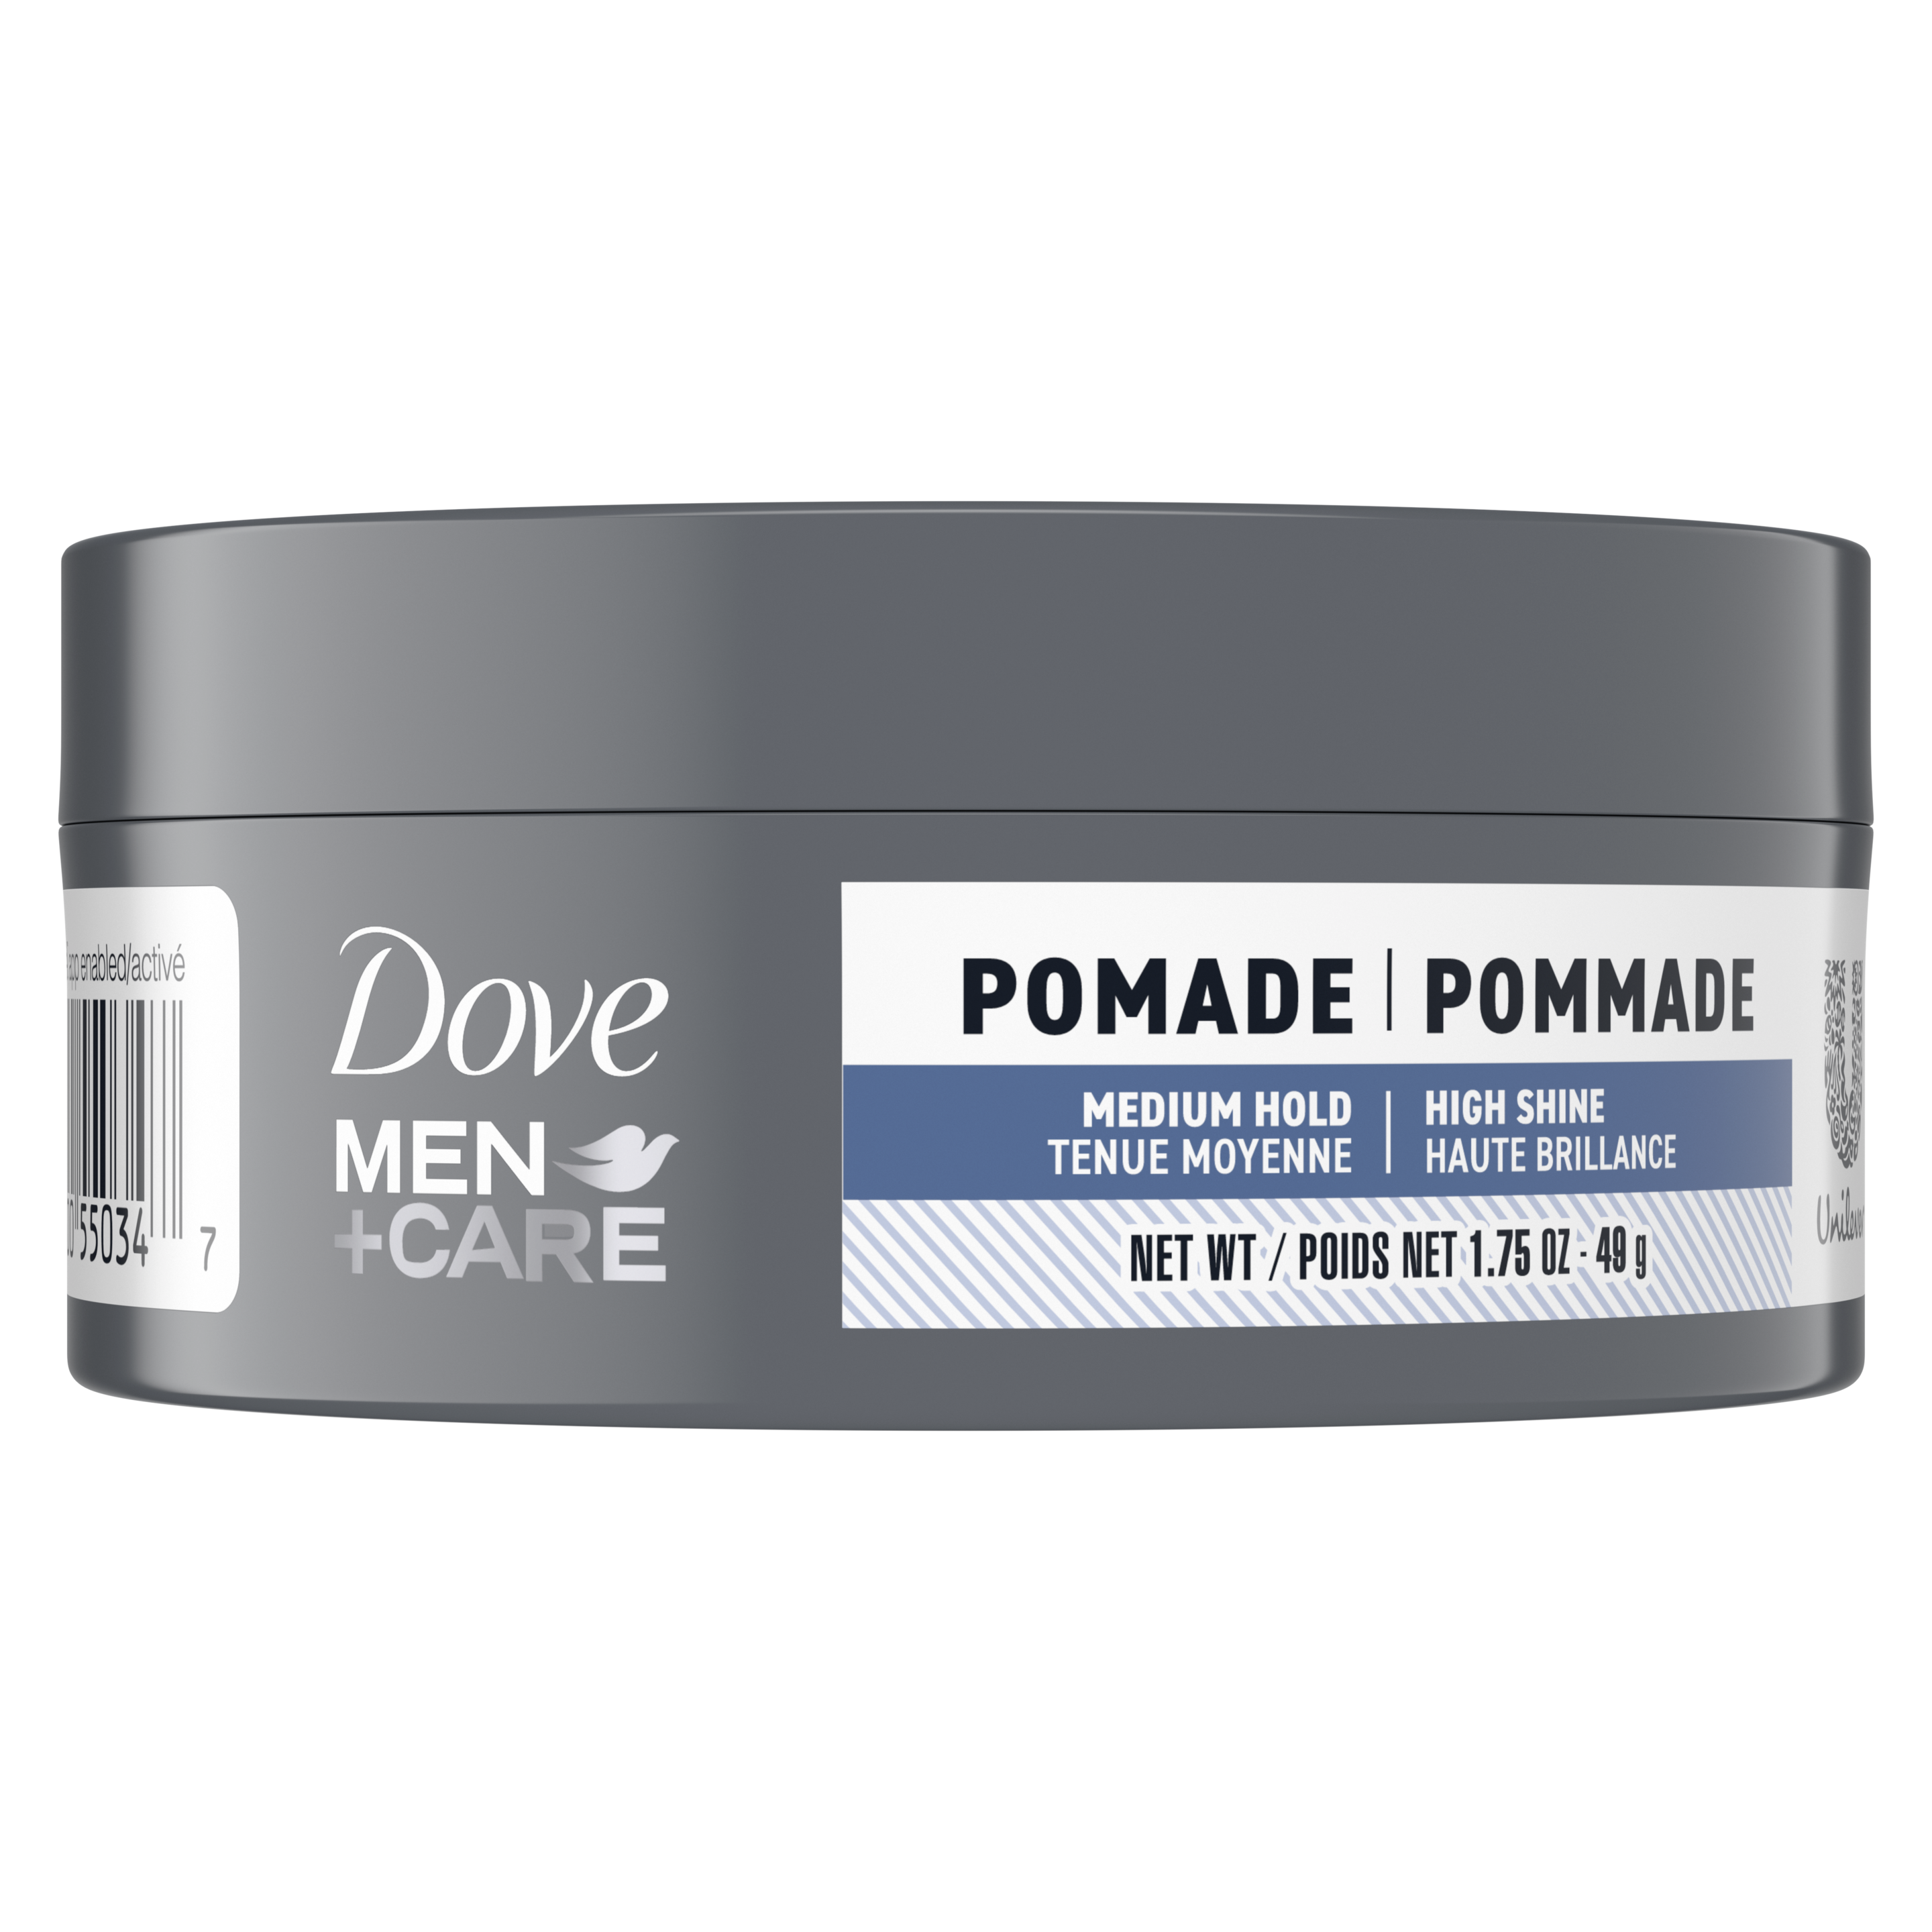 Dove Men+Care Medium Hold Polishing Pomade Front of Pack